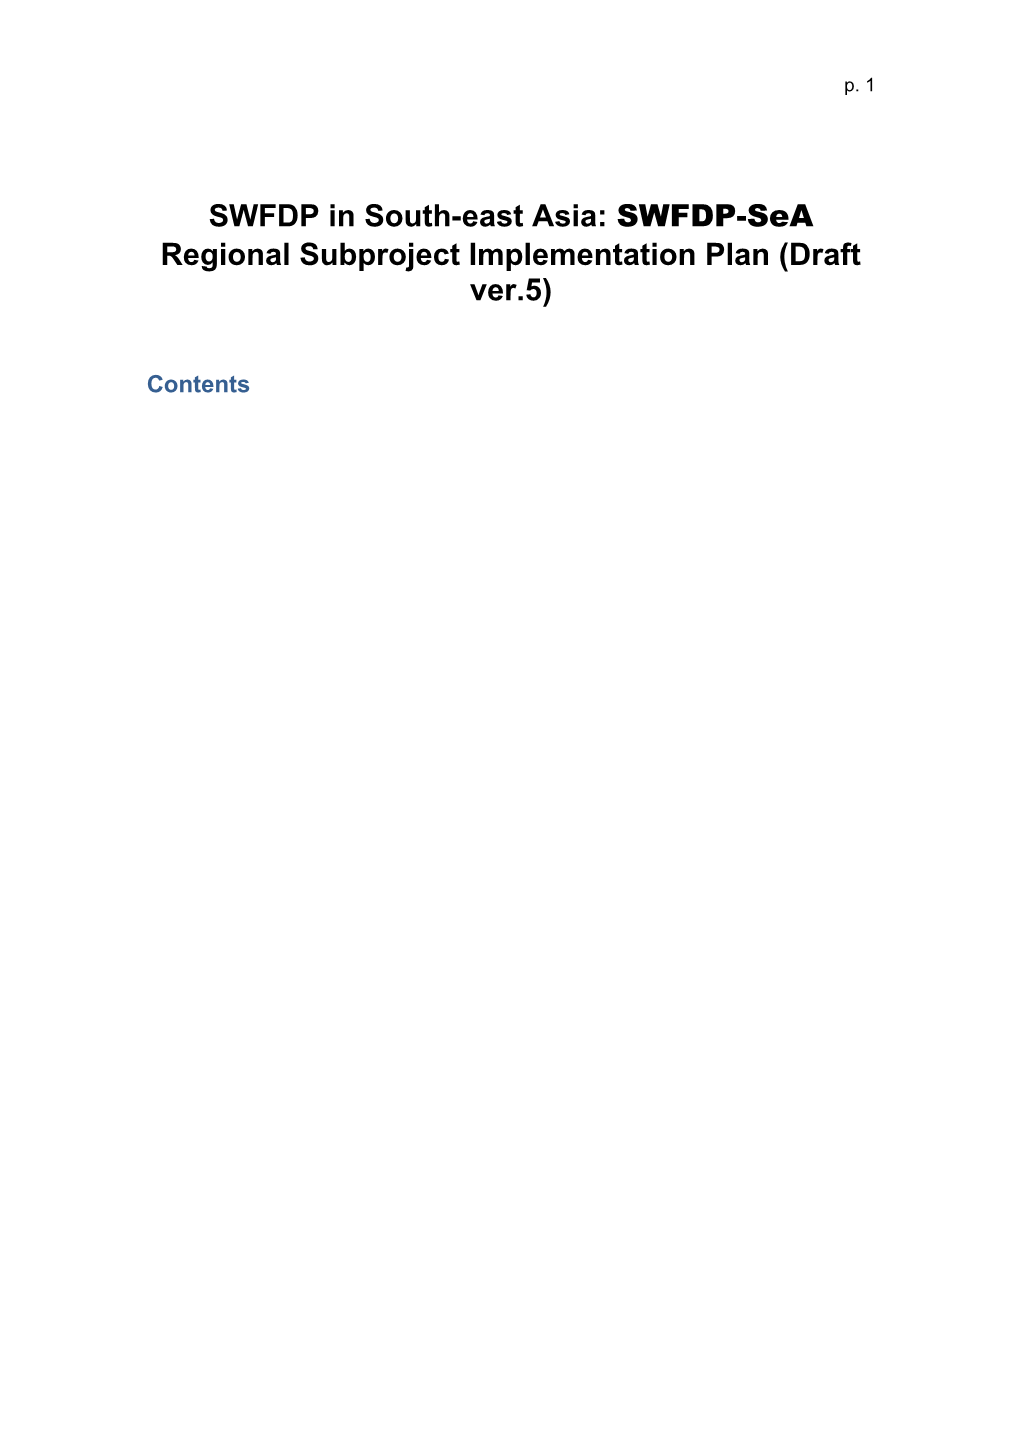 Regional Subproject Implementation Plan (Draft Ver.5)